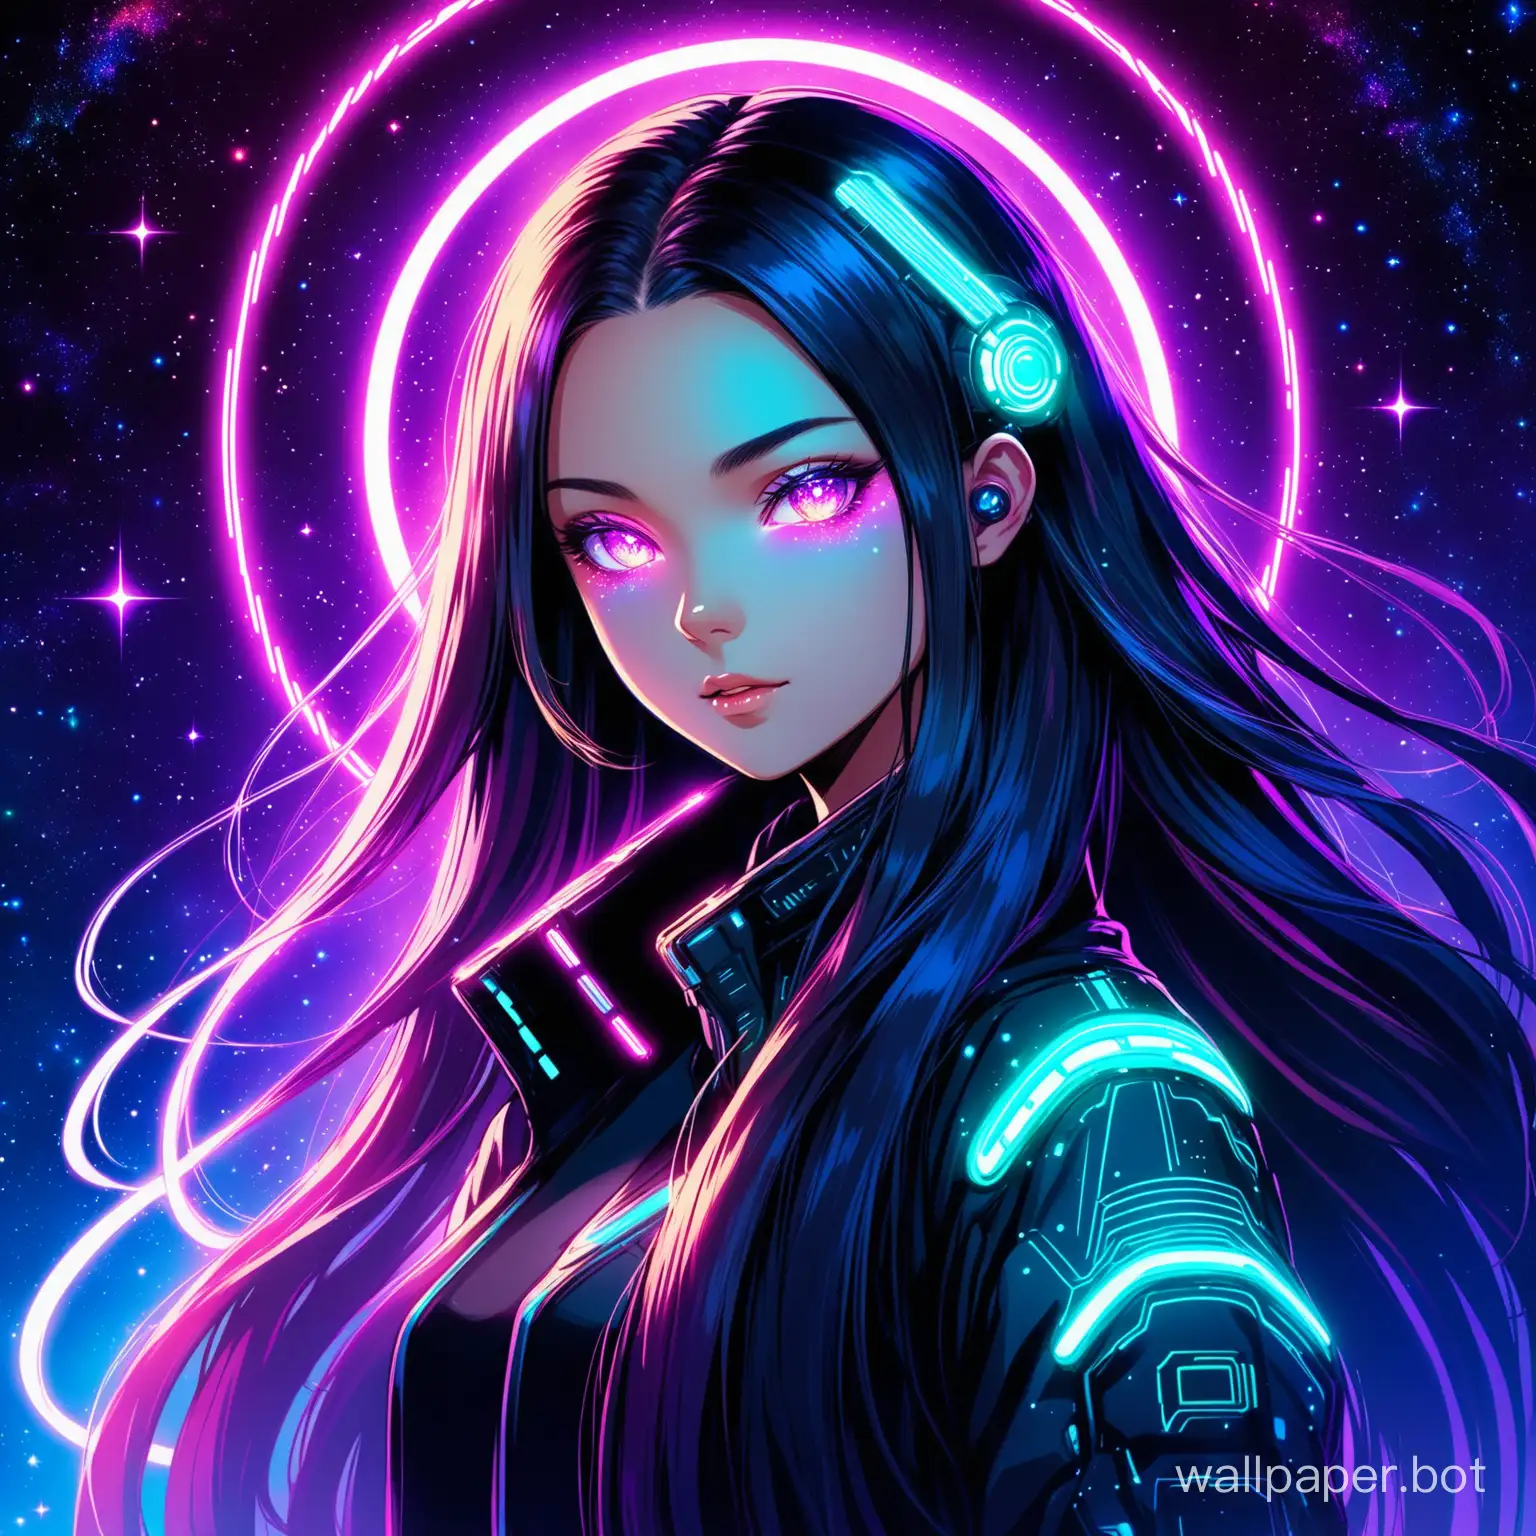 Futuristic-Cyberpunk-Girl-with-Galaxy-Hair-and-Neon-Aura